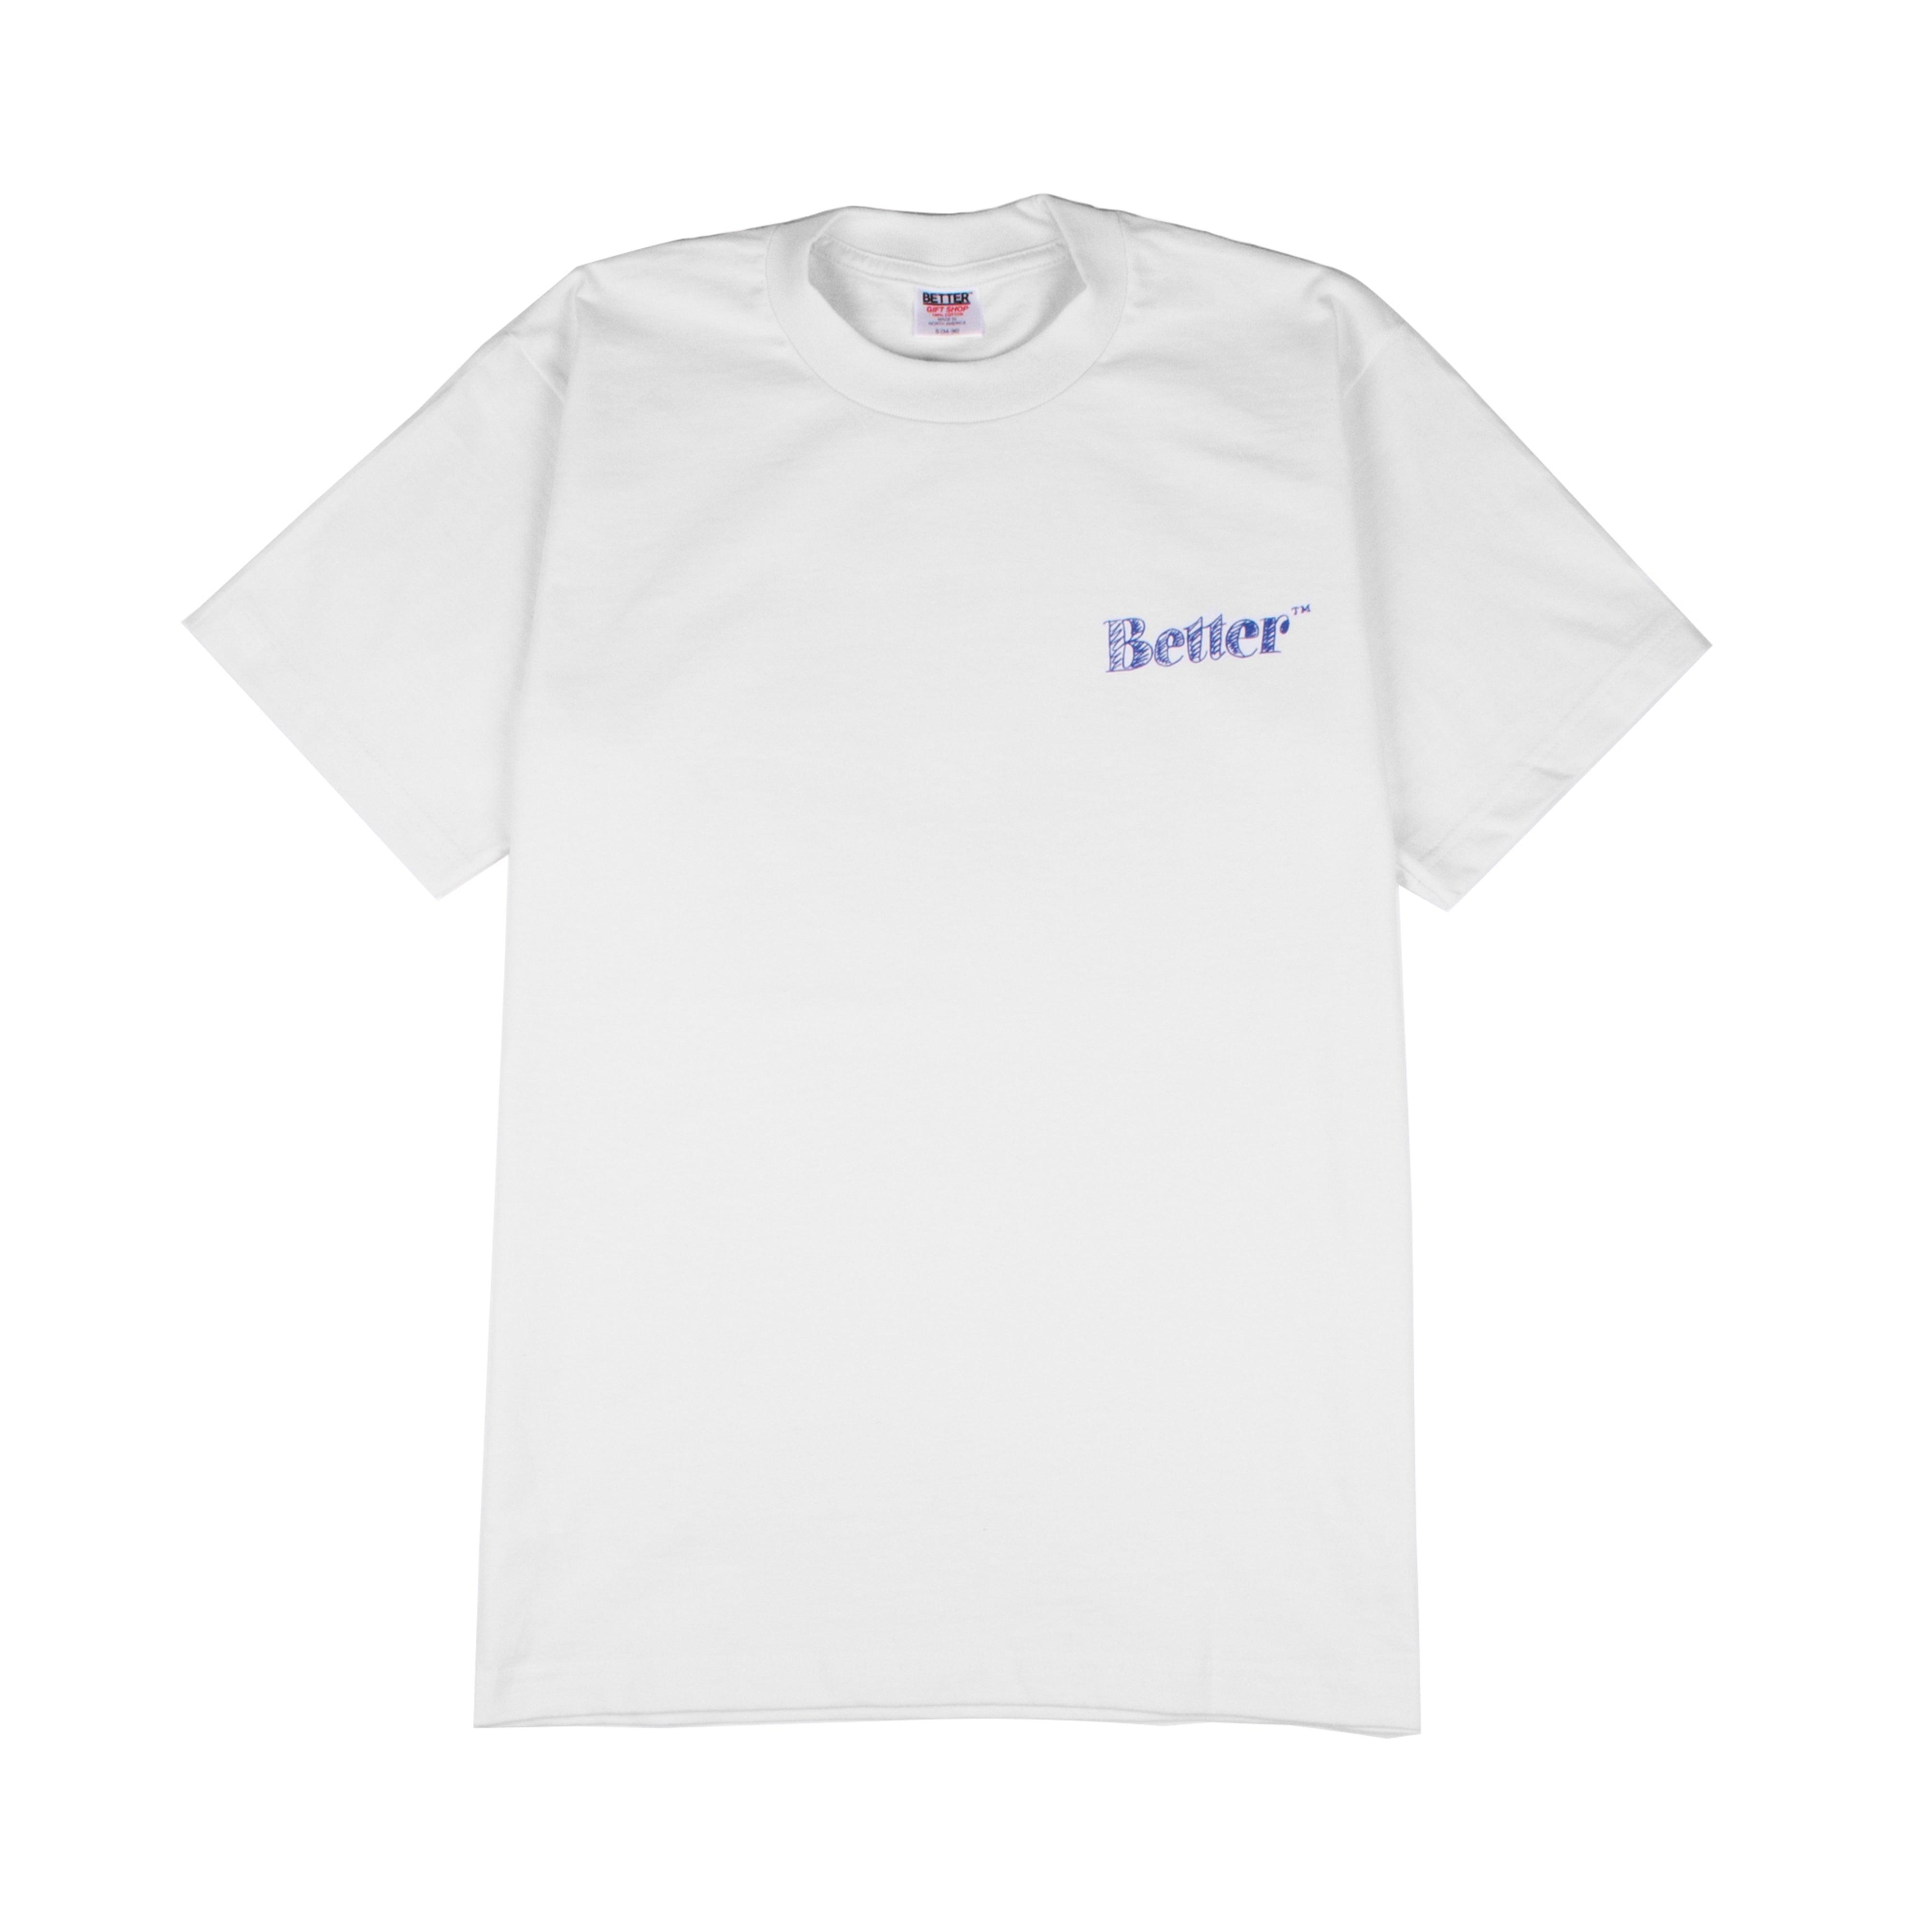 Better™ Gift Shop Scribble Logo S/S T-Shirt (White) by BETTER GIFT SHOP